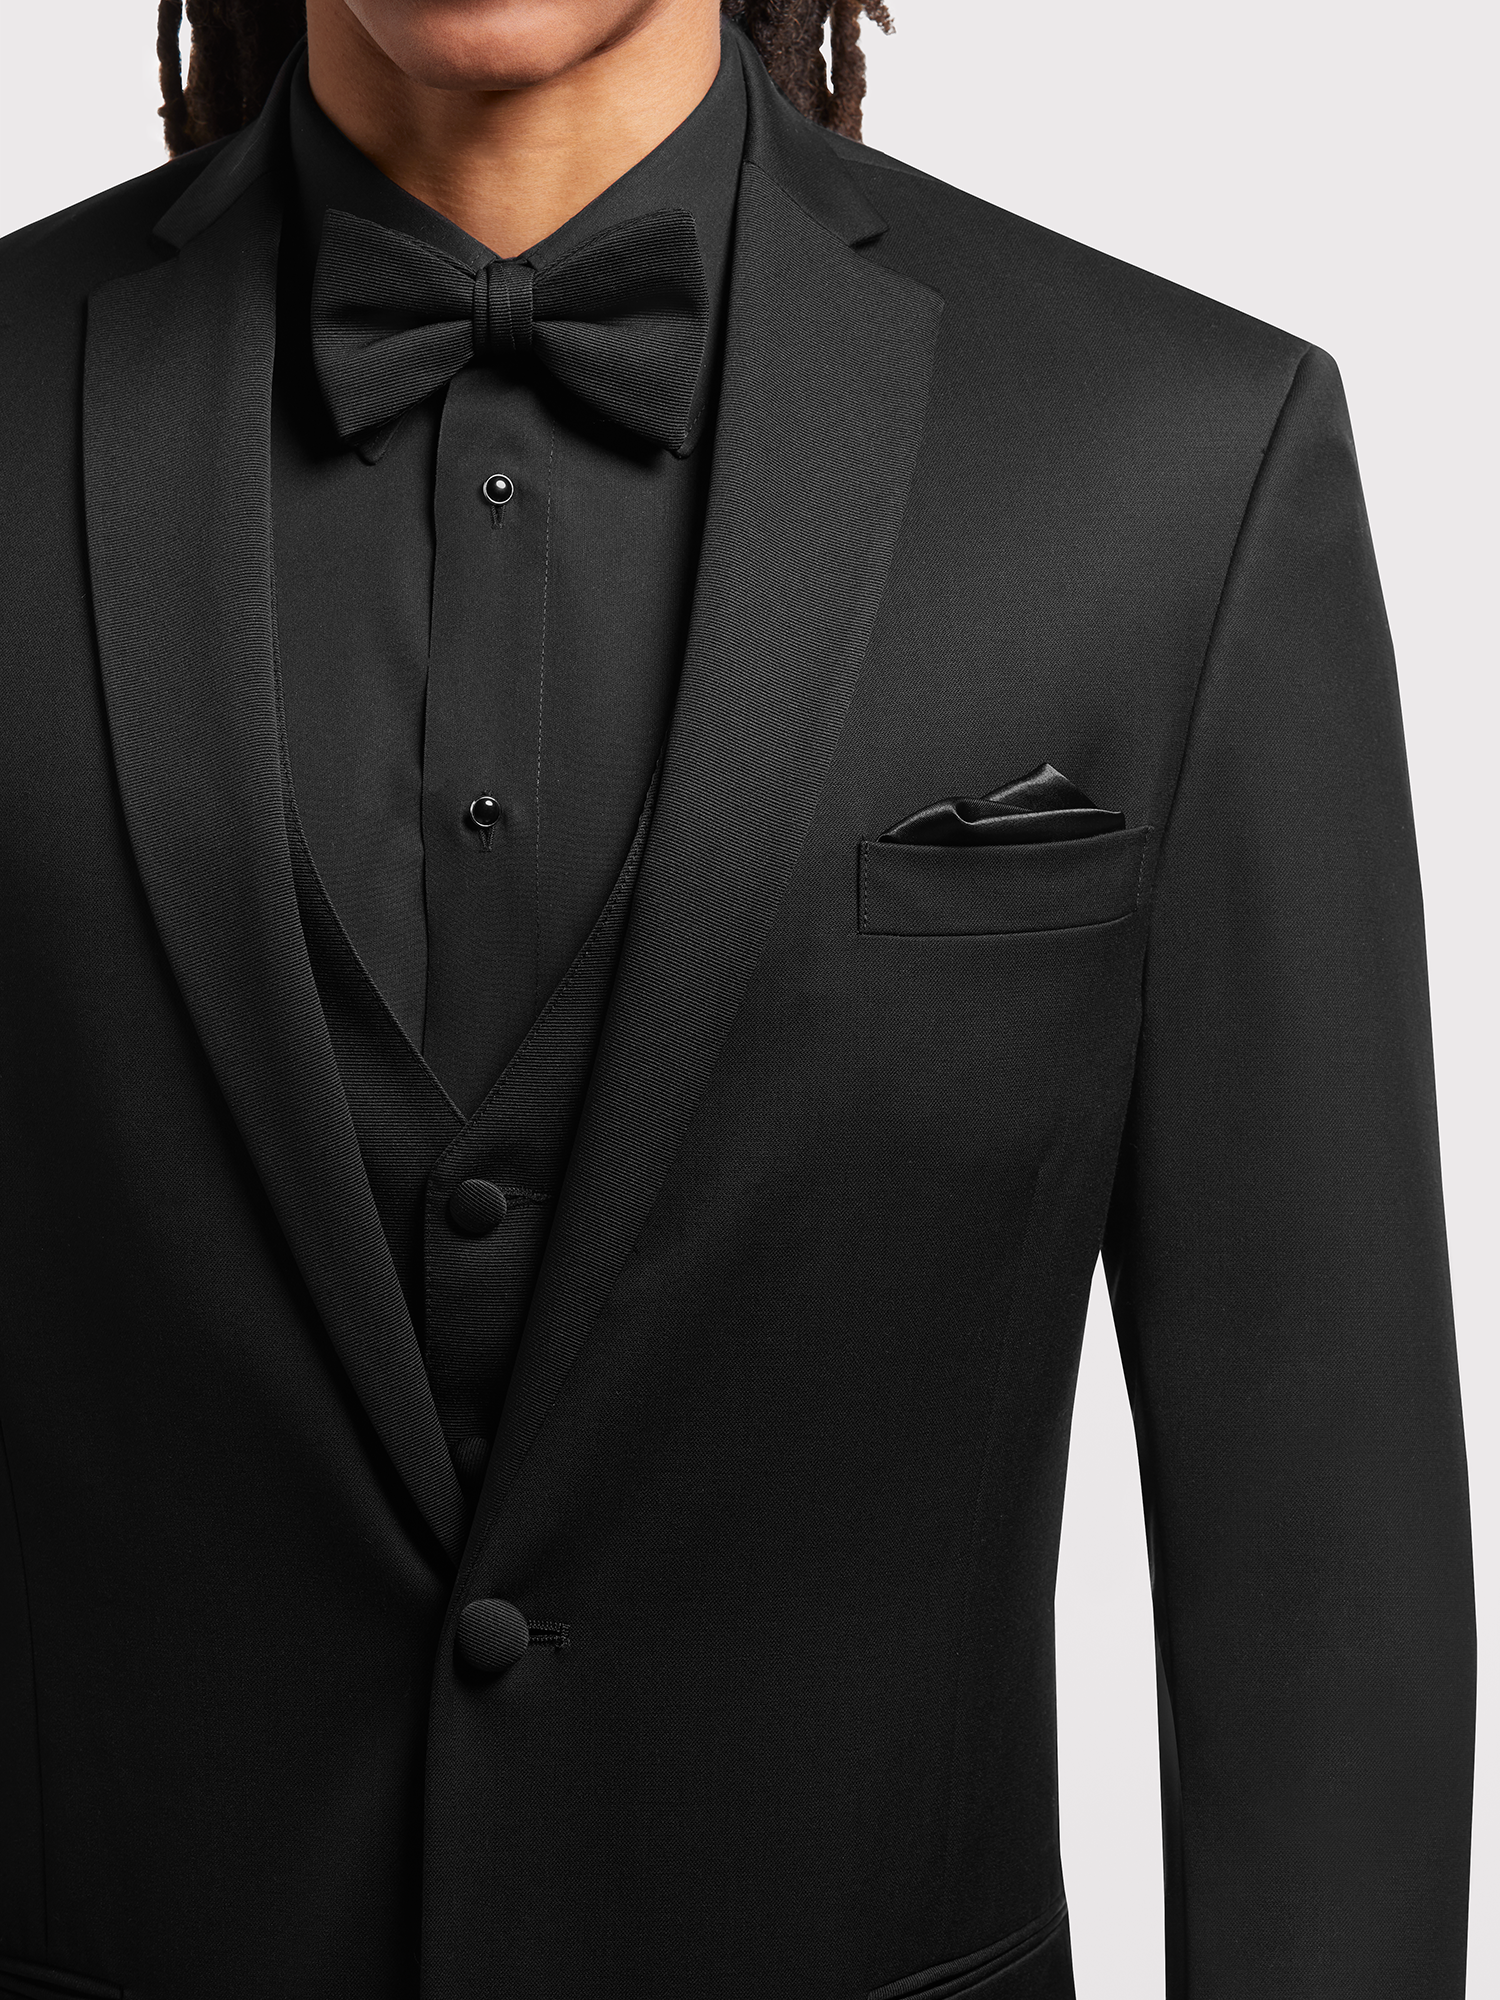 Black Men's Suit Peak Lapel Formal Party Prom Groom Tuexdos Wedding Suits  Custom